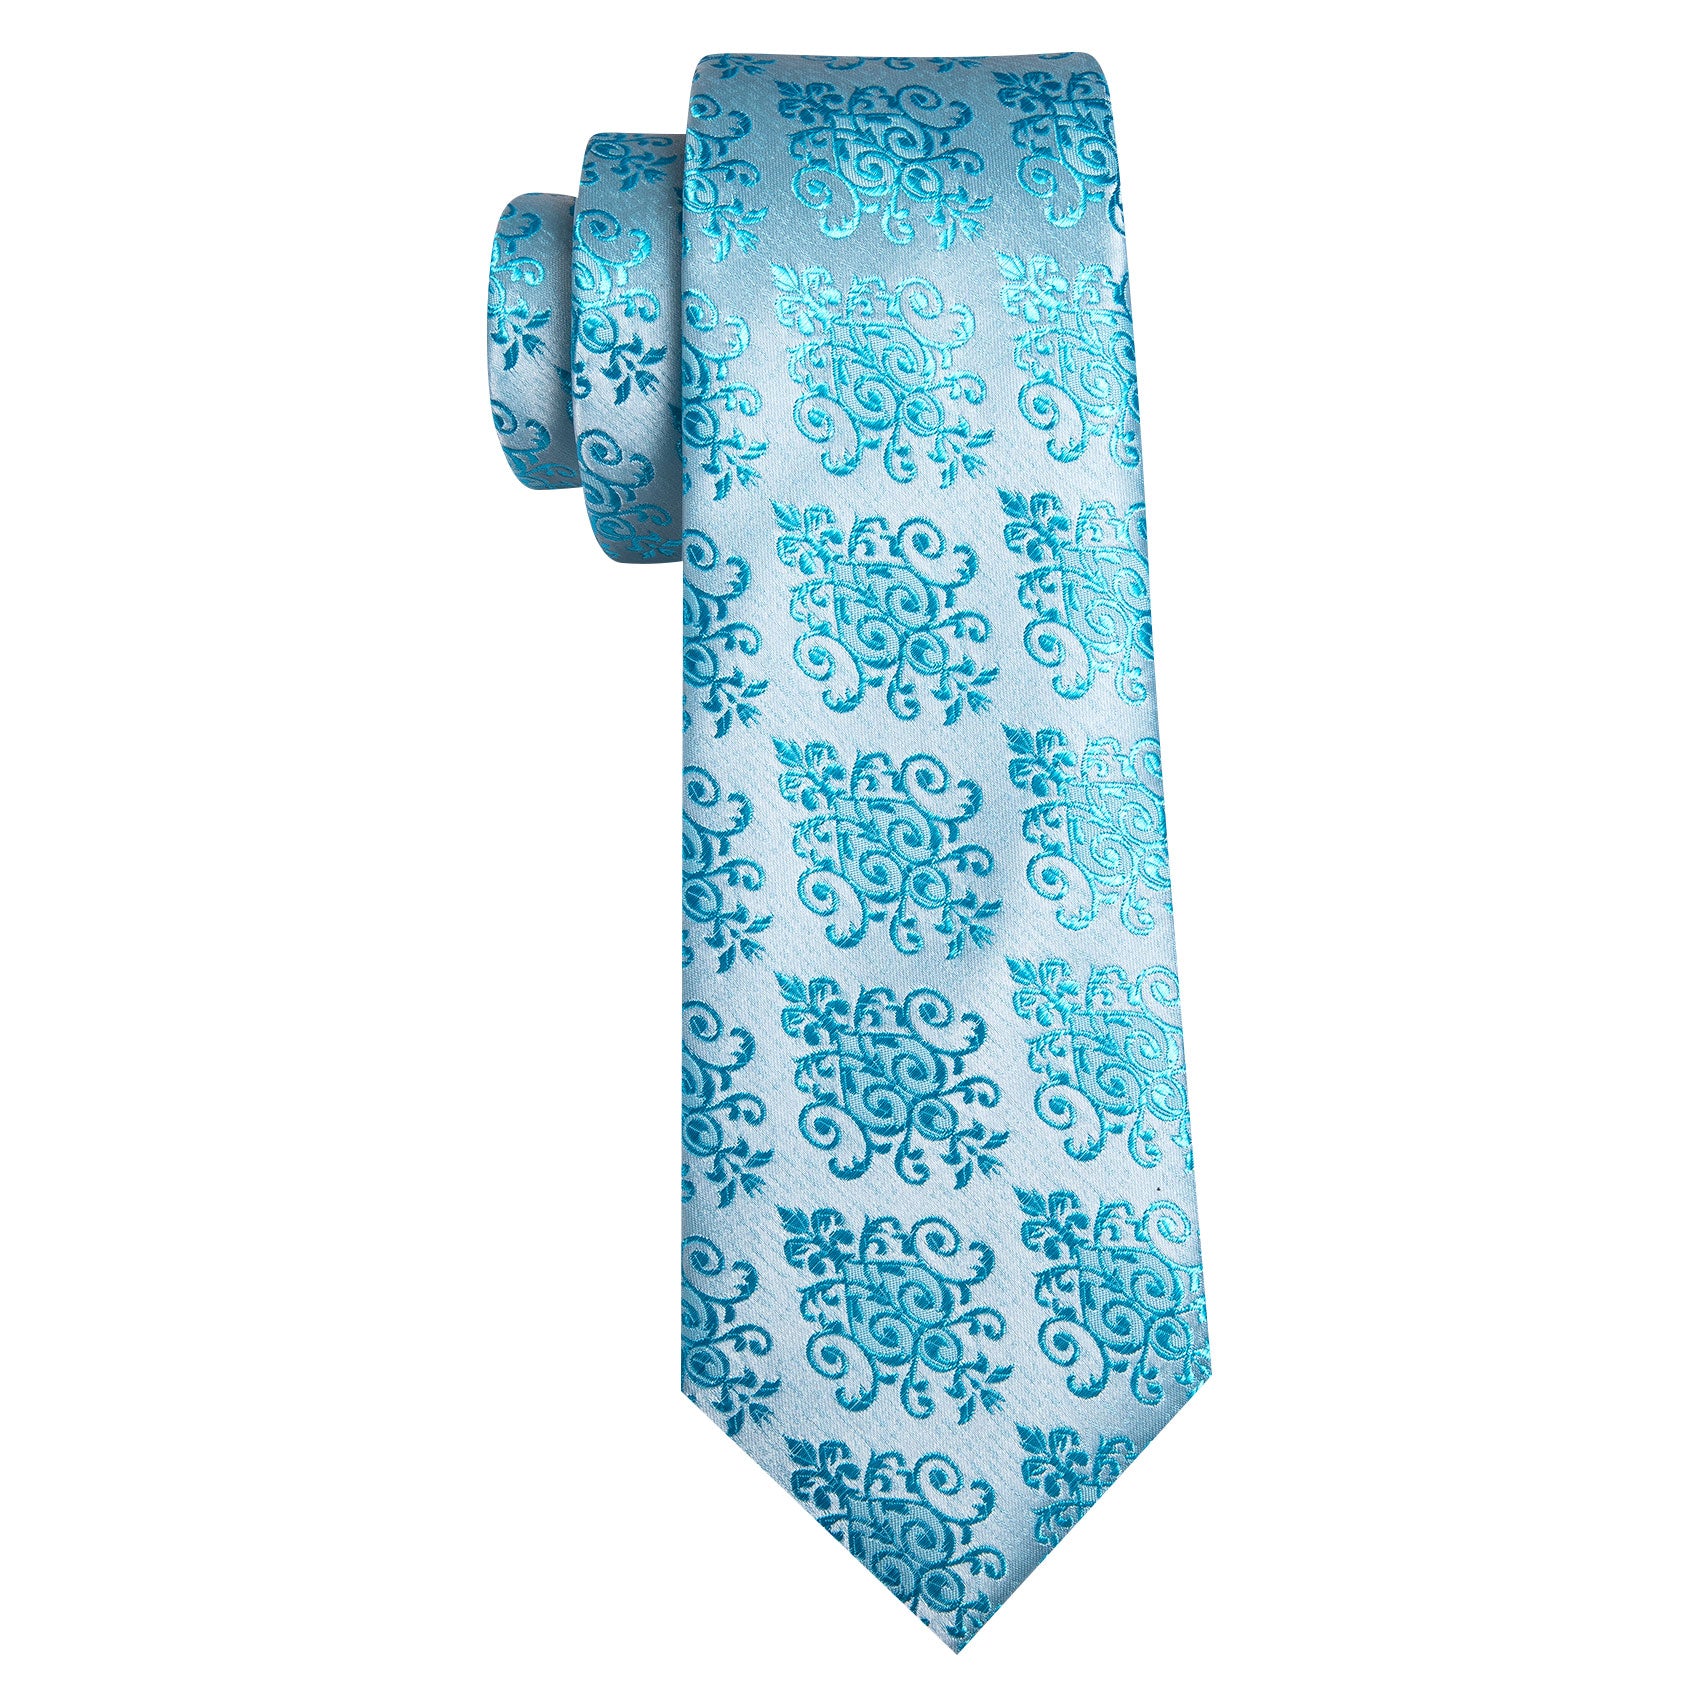 Sea Foam Floral Silk Tie Handkerchief Cufflinks Set